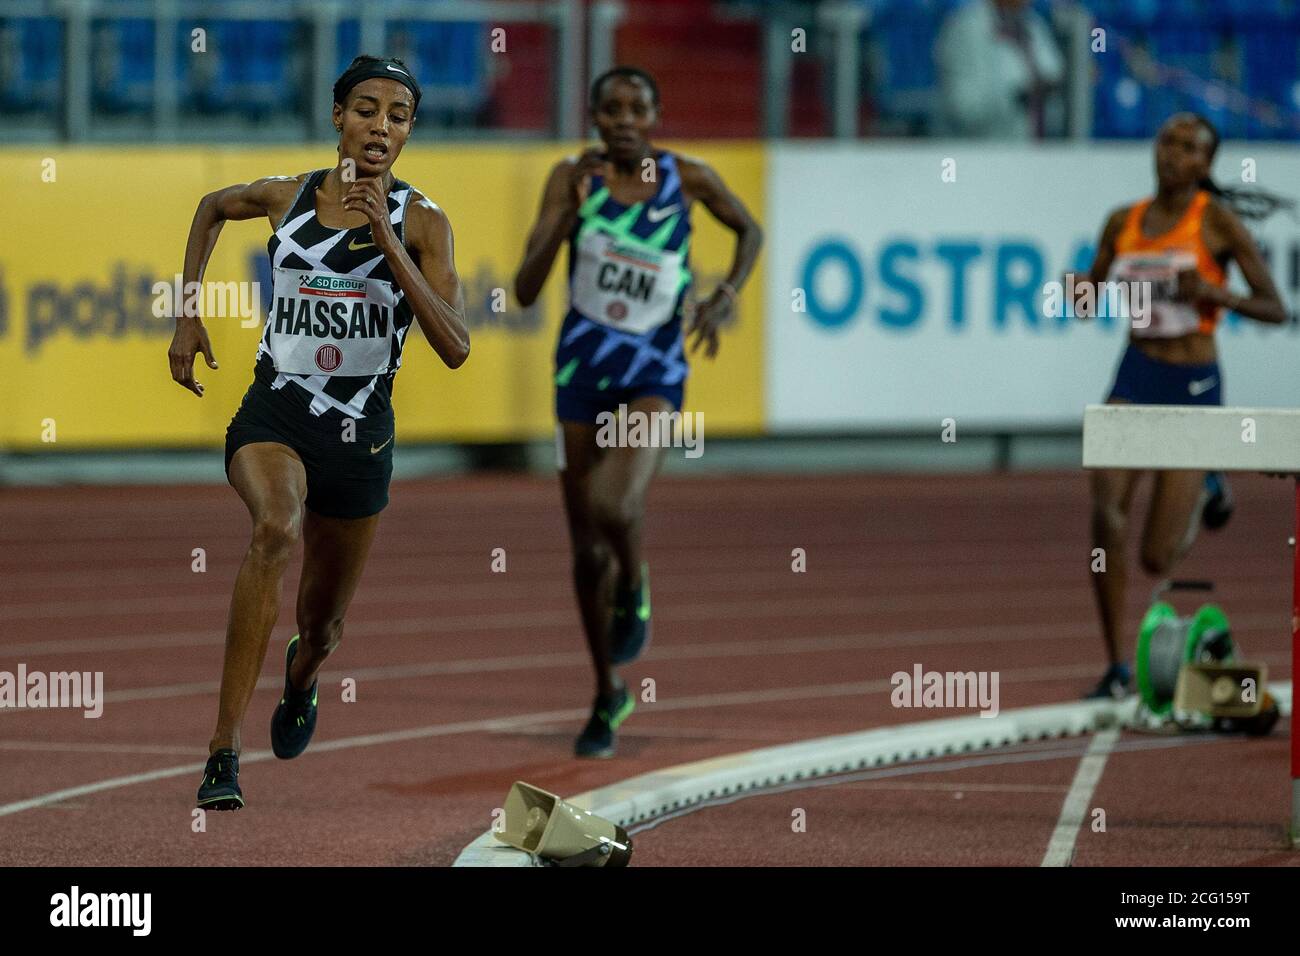 Ostrava, Czech Republic. 08th Sep, 2020. Ethiopian-born Dutch runner  Athlete Sifan Hassan (represents Netherlands) won the women´s race 5000m  during the Golden Spike Ostrava athletics IAAF World Challenge event, on  September 8